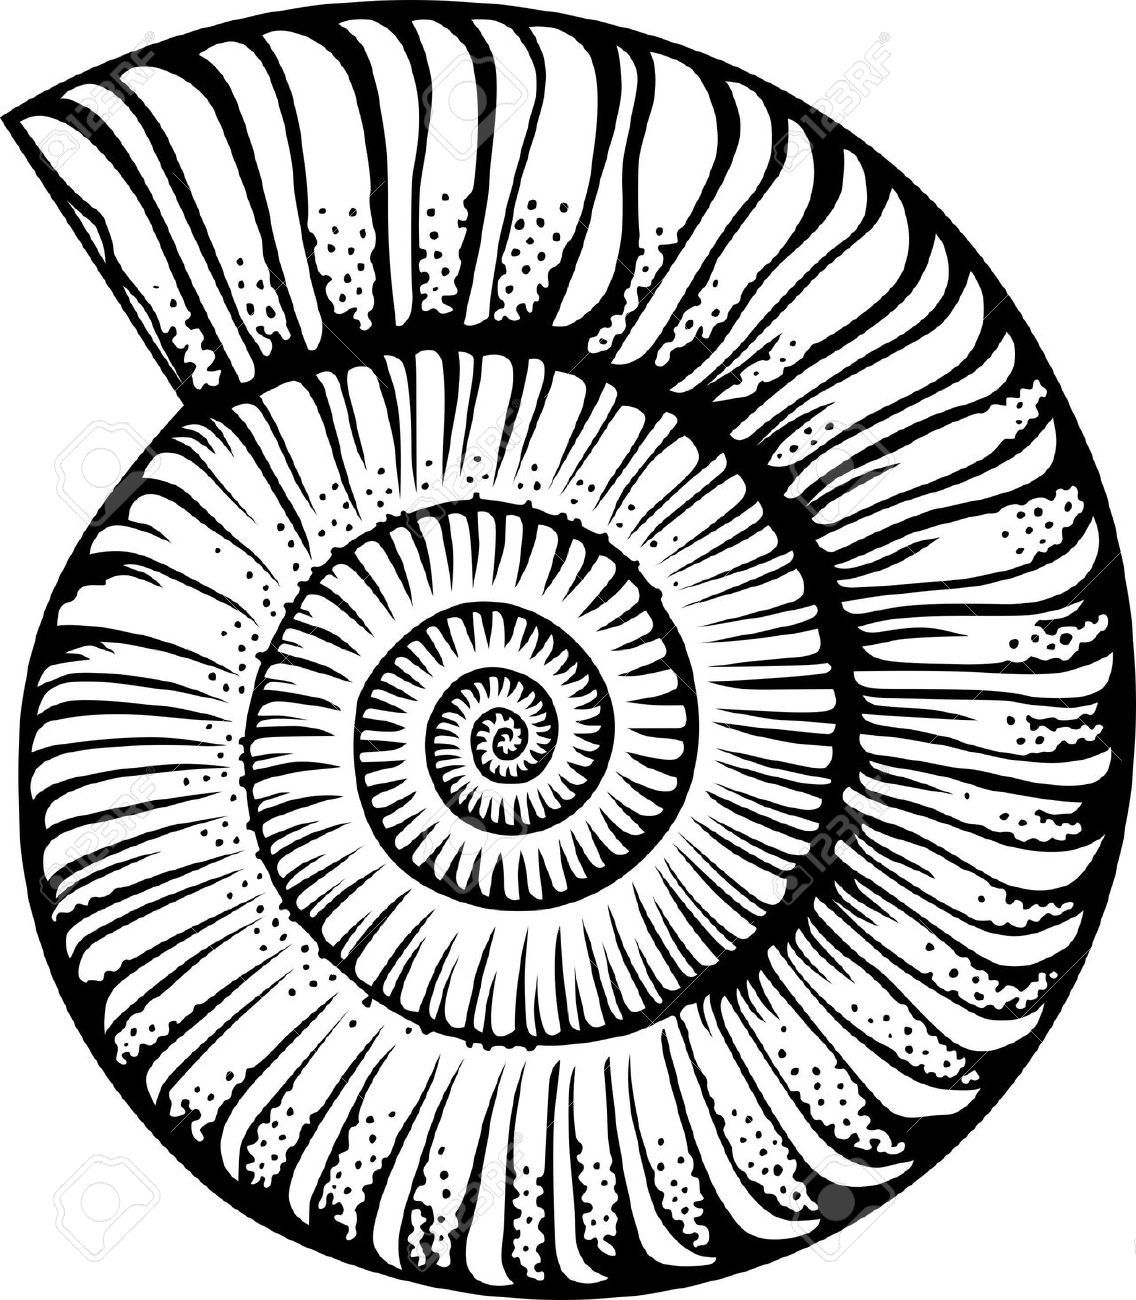 Shell clip art sea shell seashell isolated on white illustration